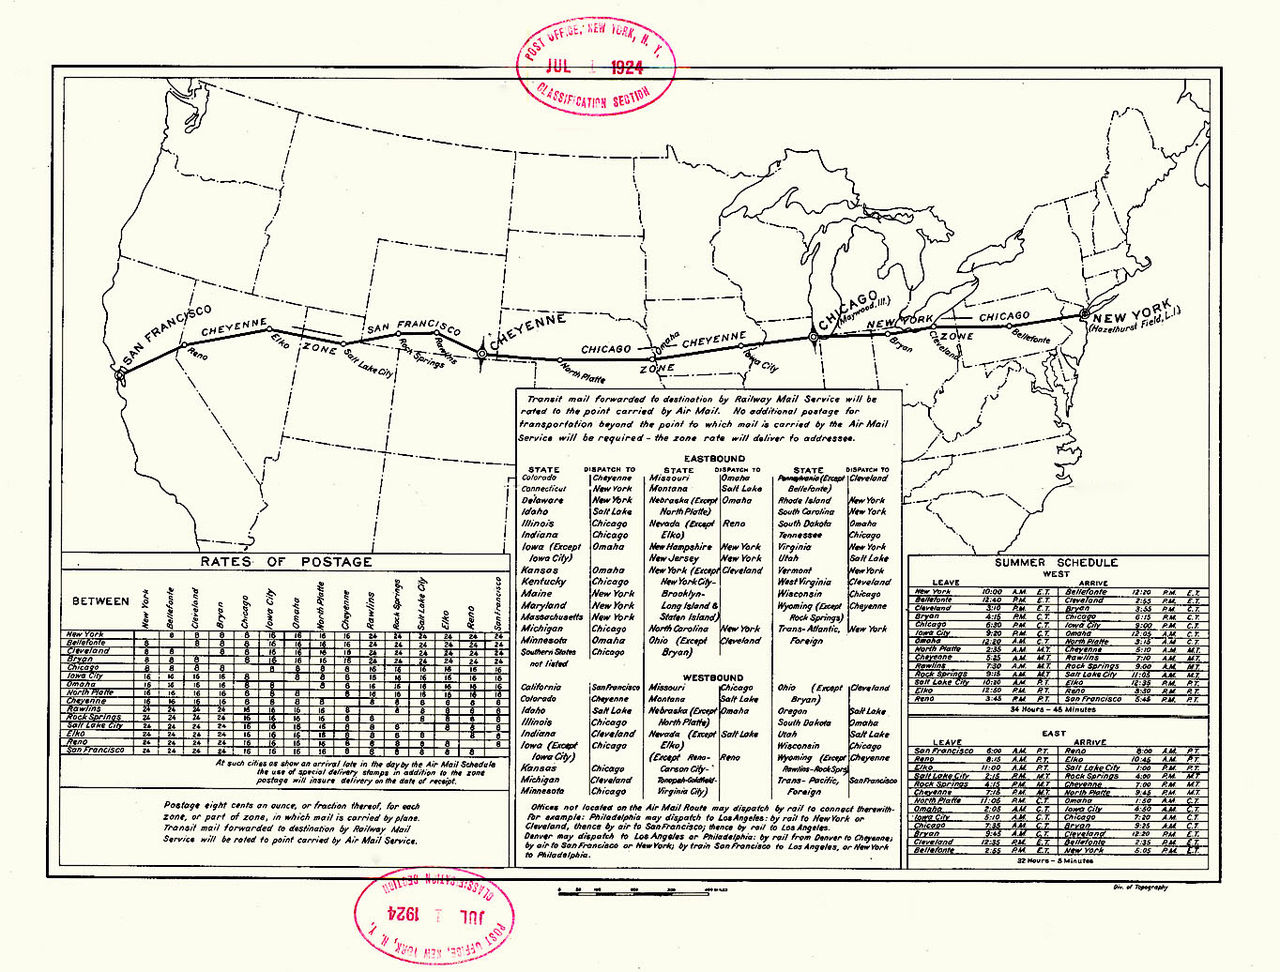 1280px-Transcontinental_Air_Mail_Map_1924.jpg